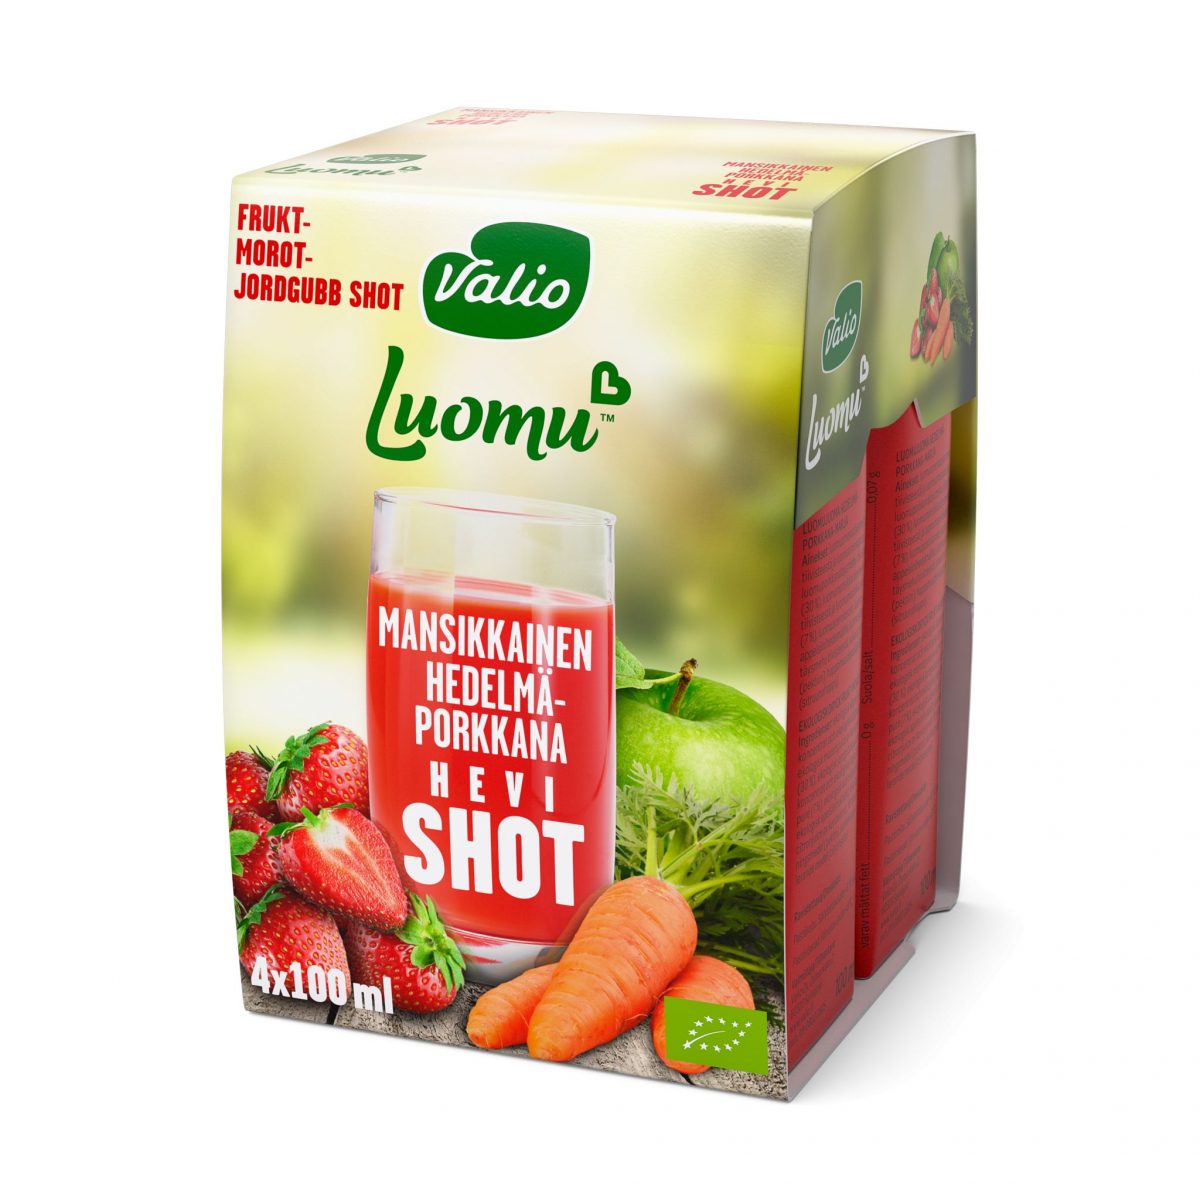 Luomu mansikkainen hedelmä-porkkana shot – Marketim – Gıda Reyonu